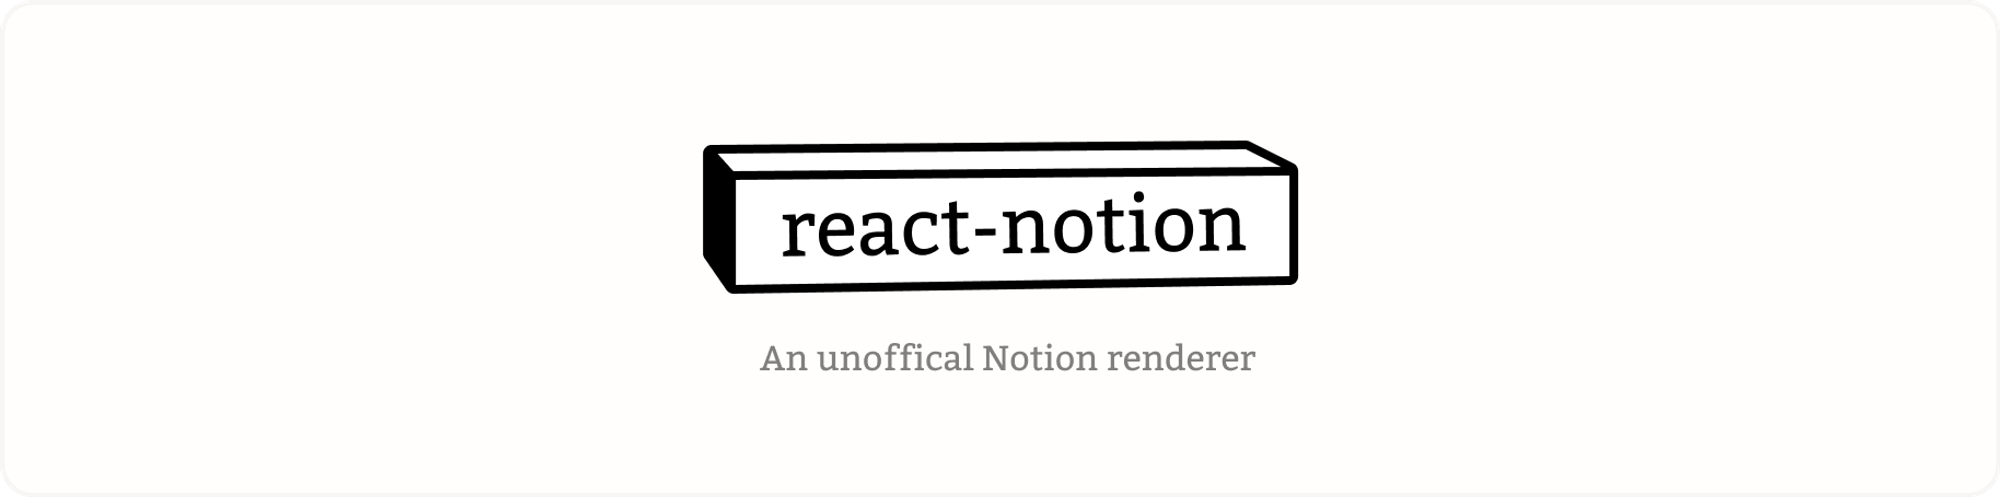 react-notion GitHub에서 가져옴 (